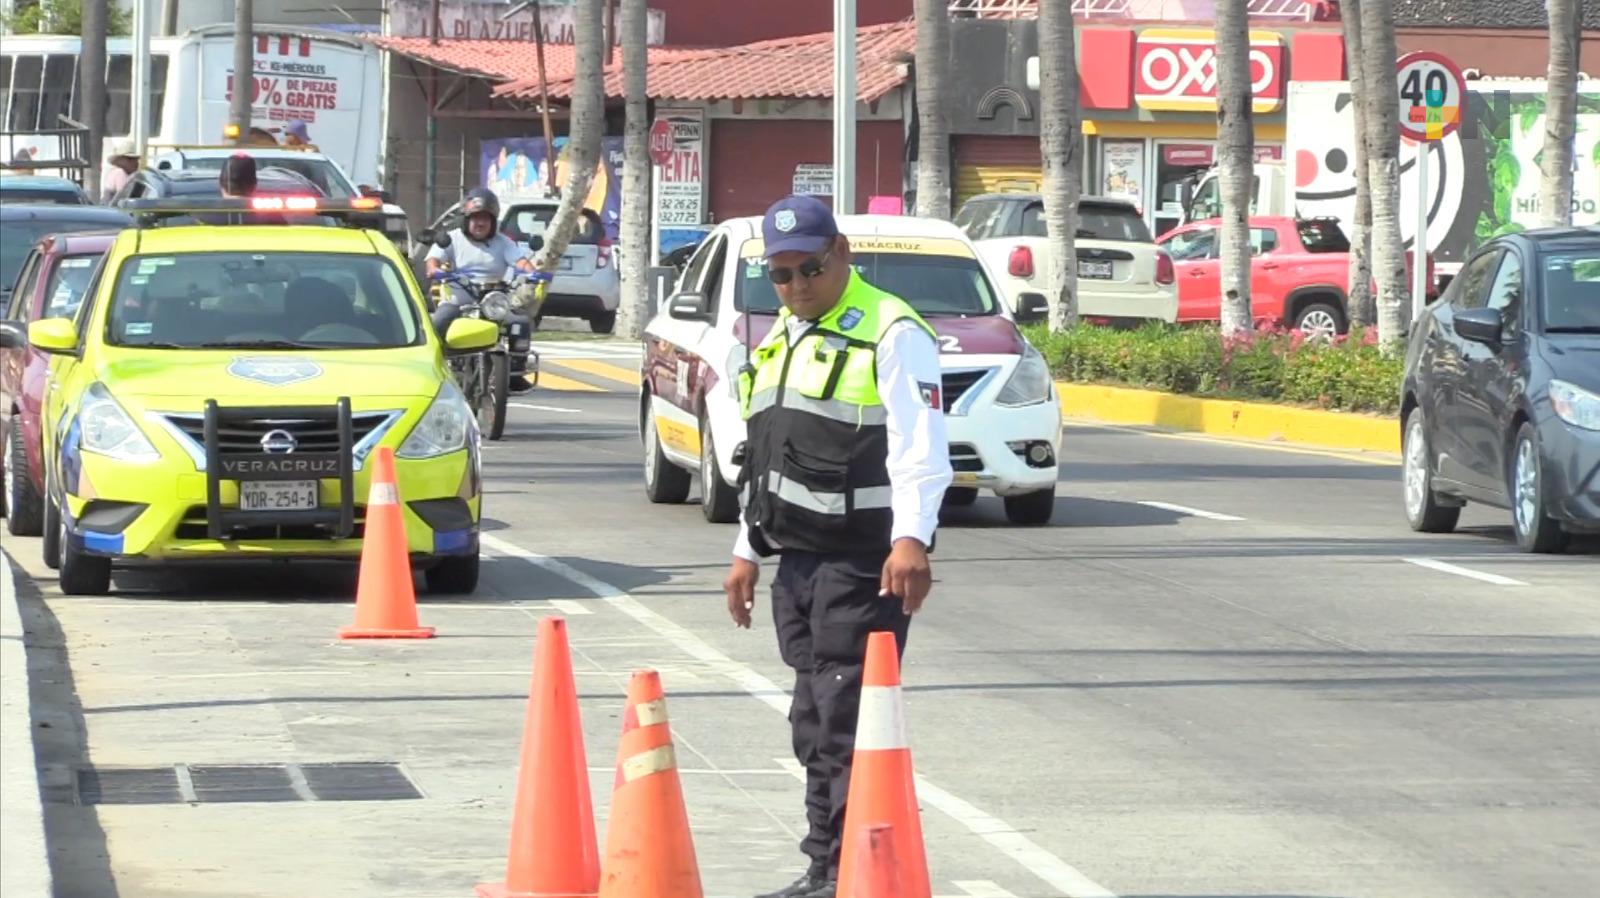 En Veracruz puerto piden eliminar retenes; ilegales e inconstitucionales dicen juristas